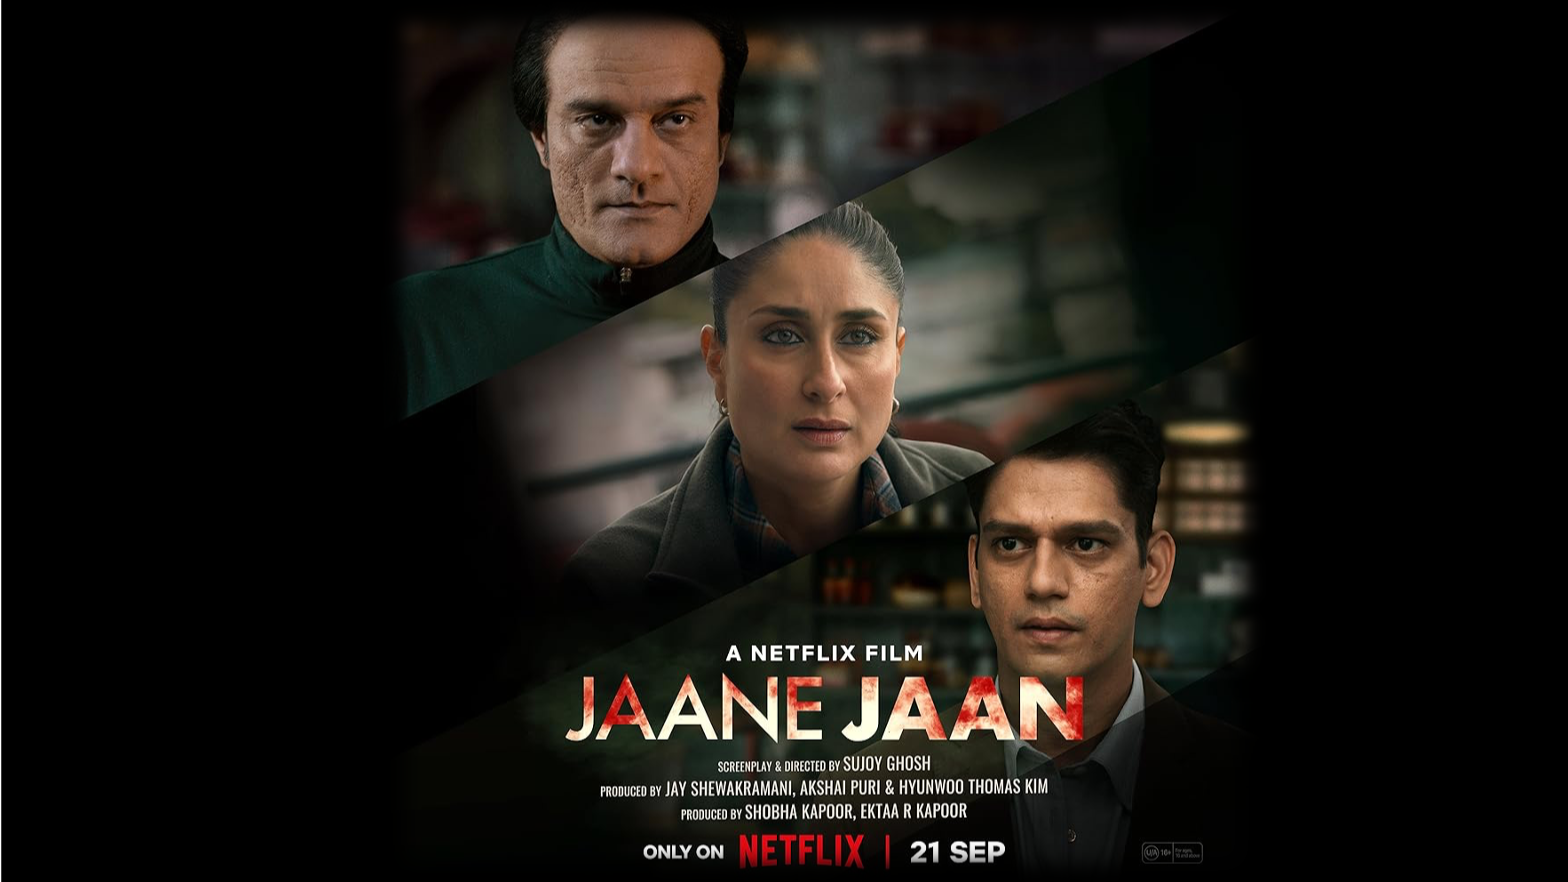 https://adgully.me/post/3395/jaane-jaan-kareena-kapoors-matured-act-elevates-an-average-thriller